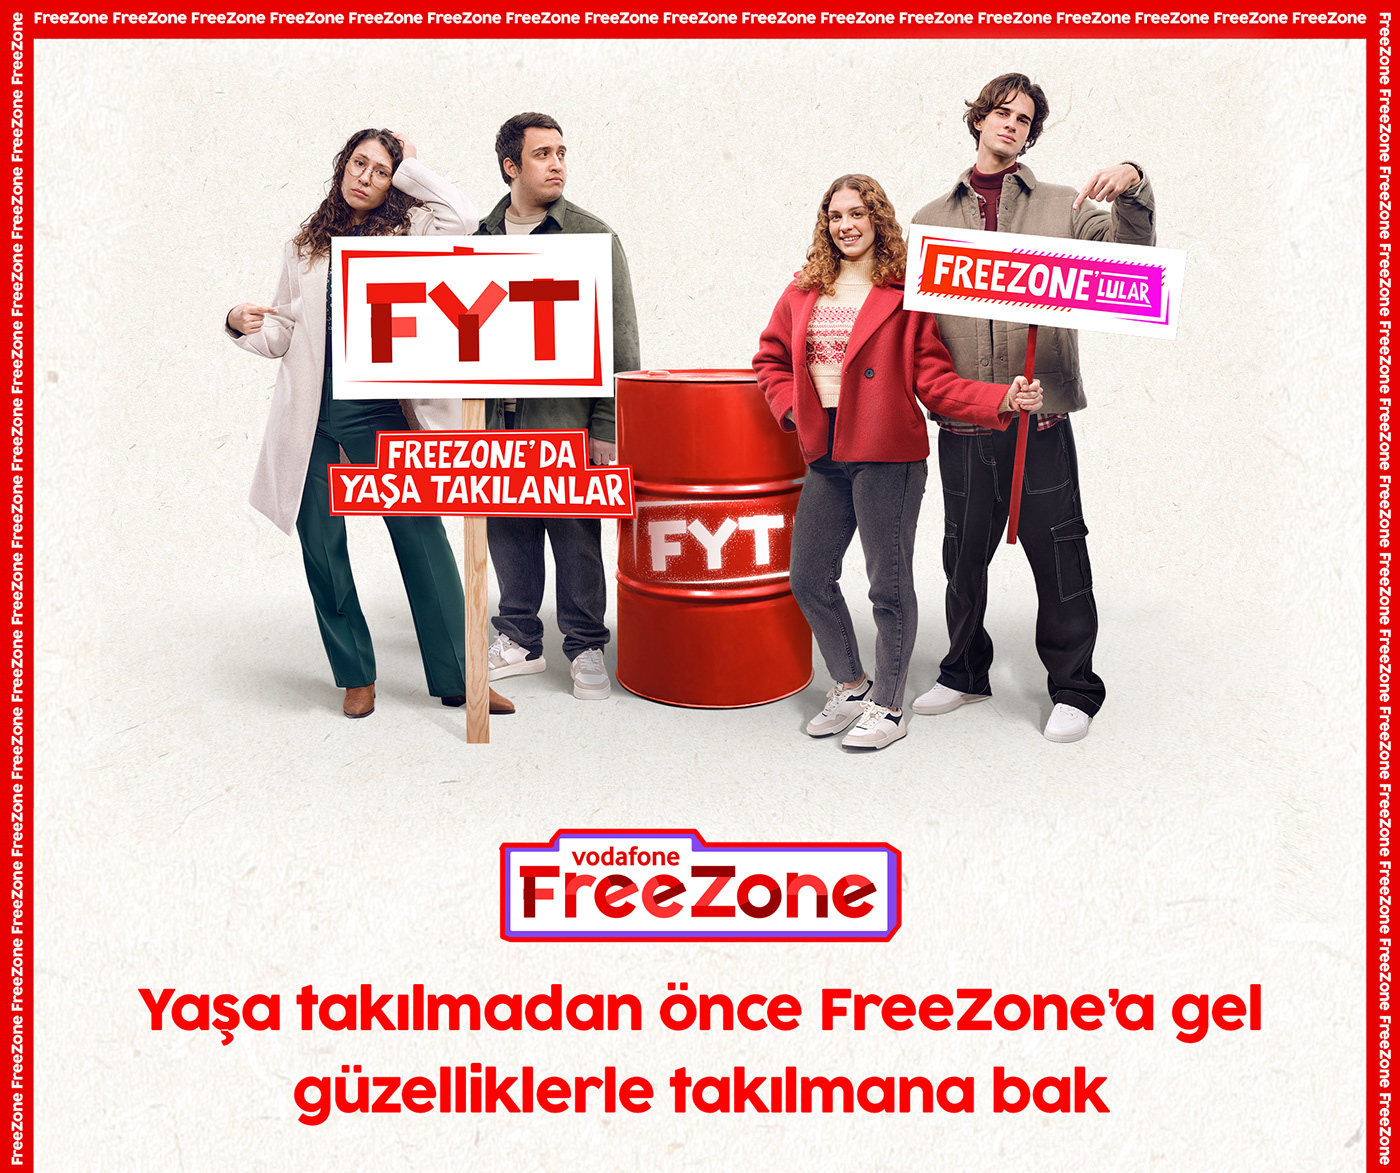 vodafone freezone campaign Advertising  Graphic Designer marketing   fyt